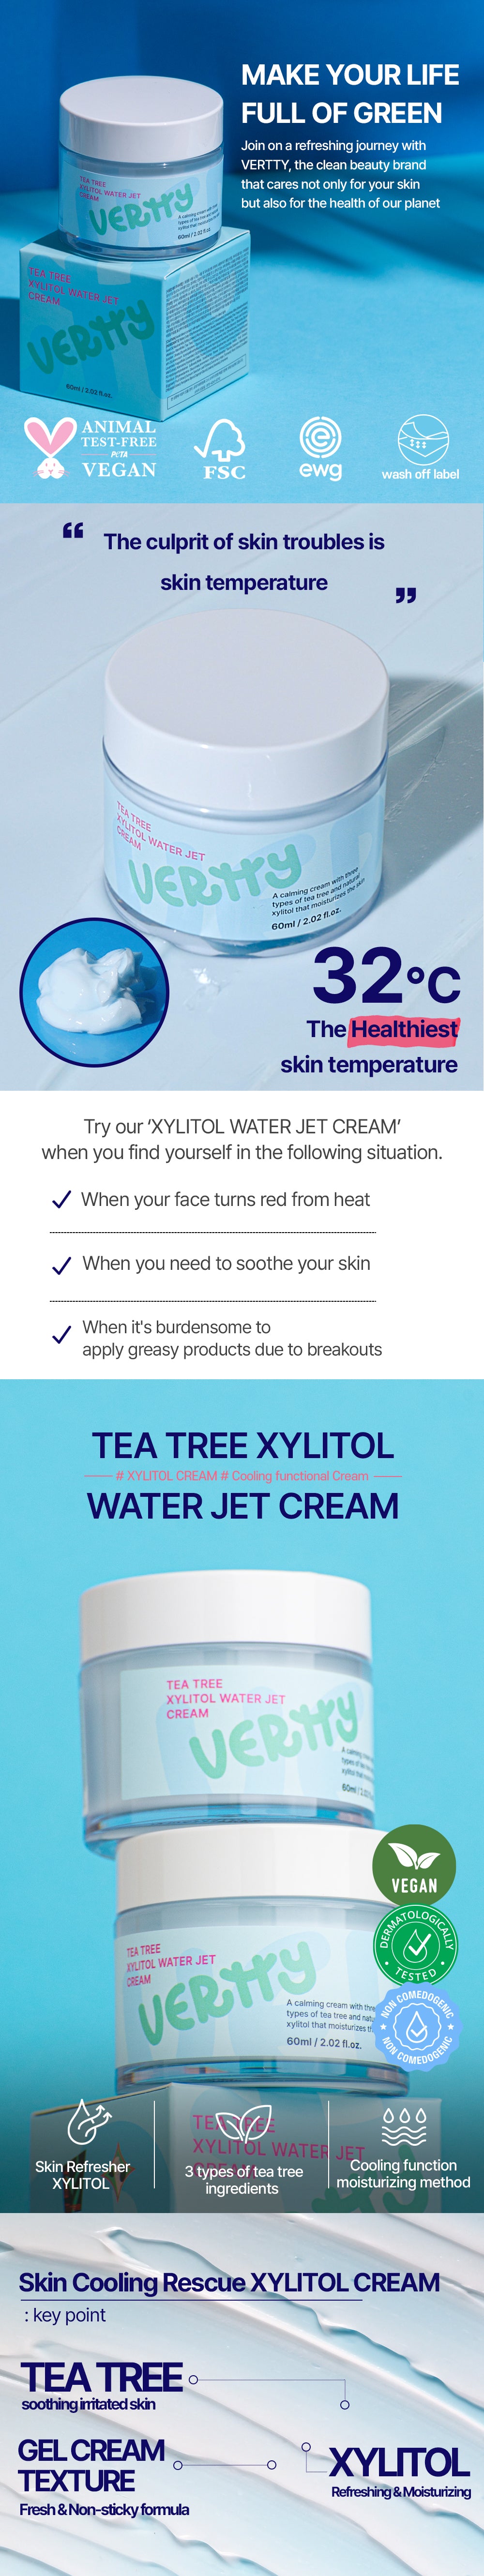 Vertty_Tea Tree Xylitol Water Jet Cream 60ml_1